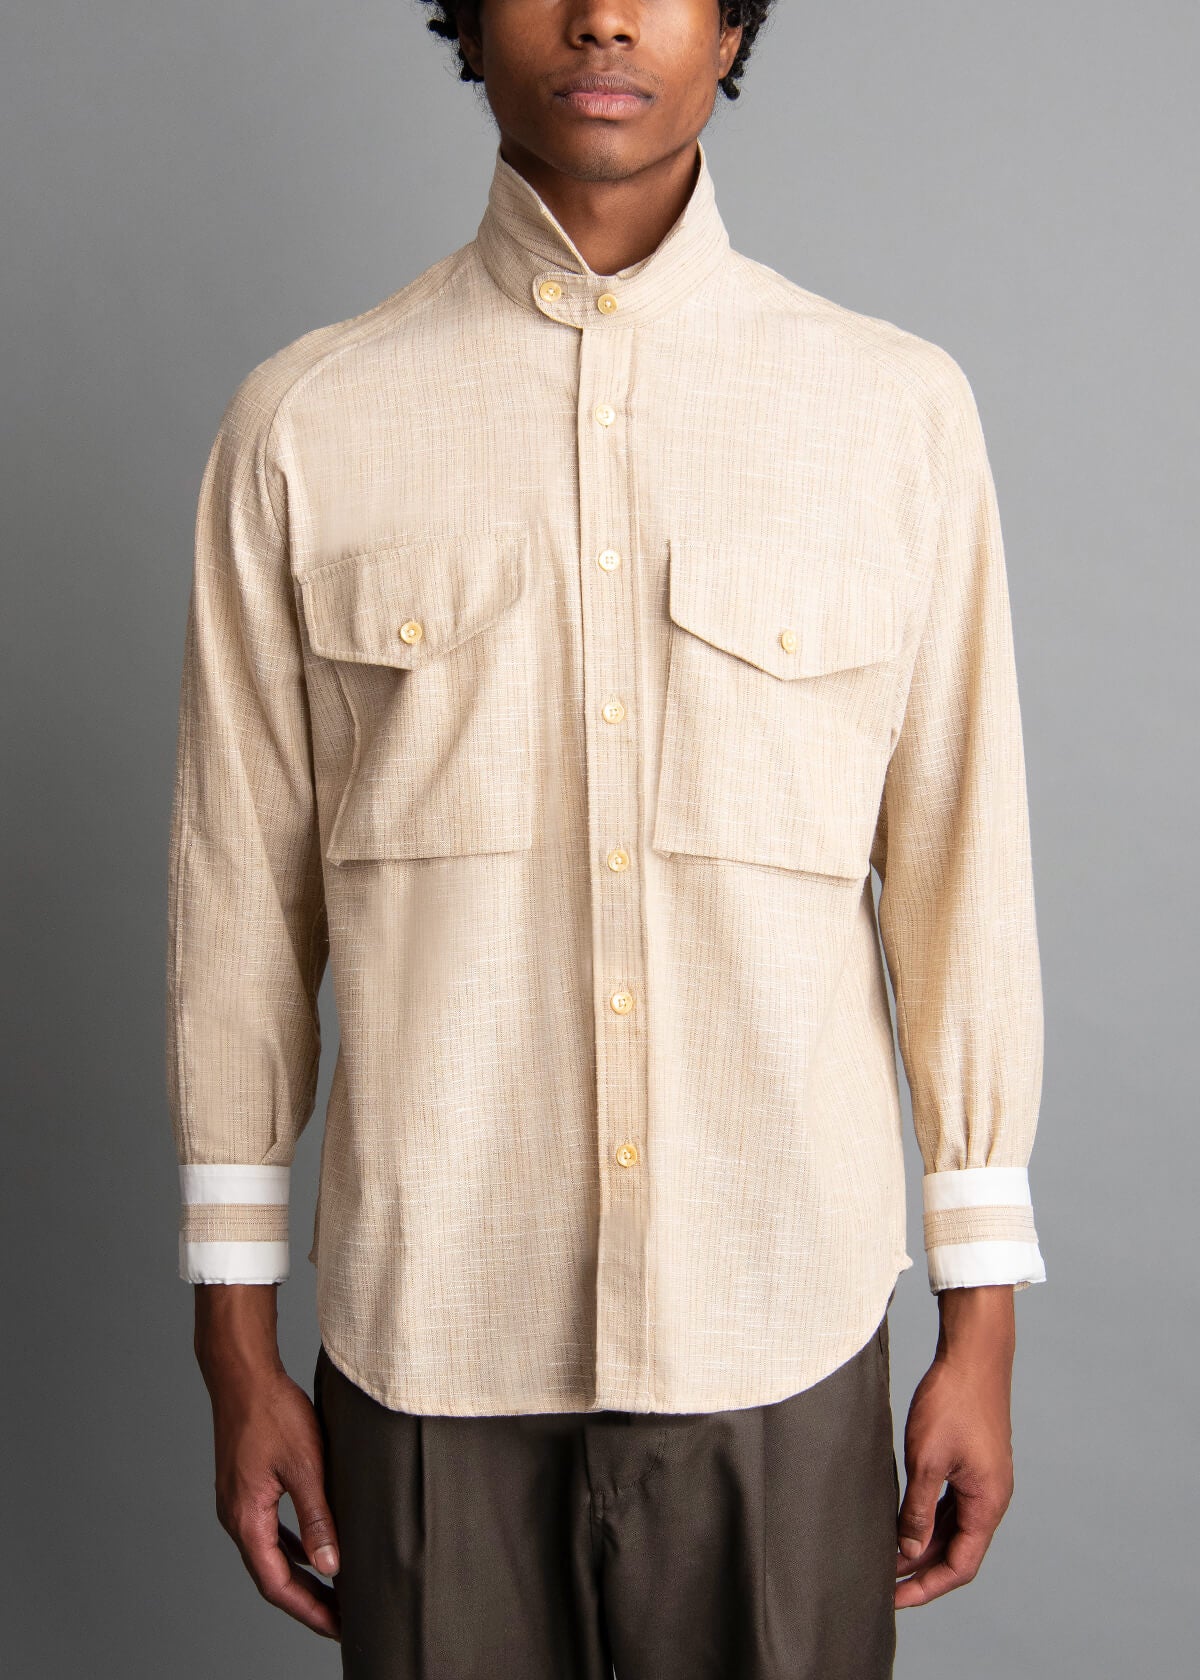 men's linen shirt in a cream tone